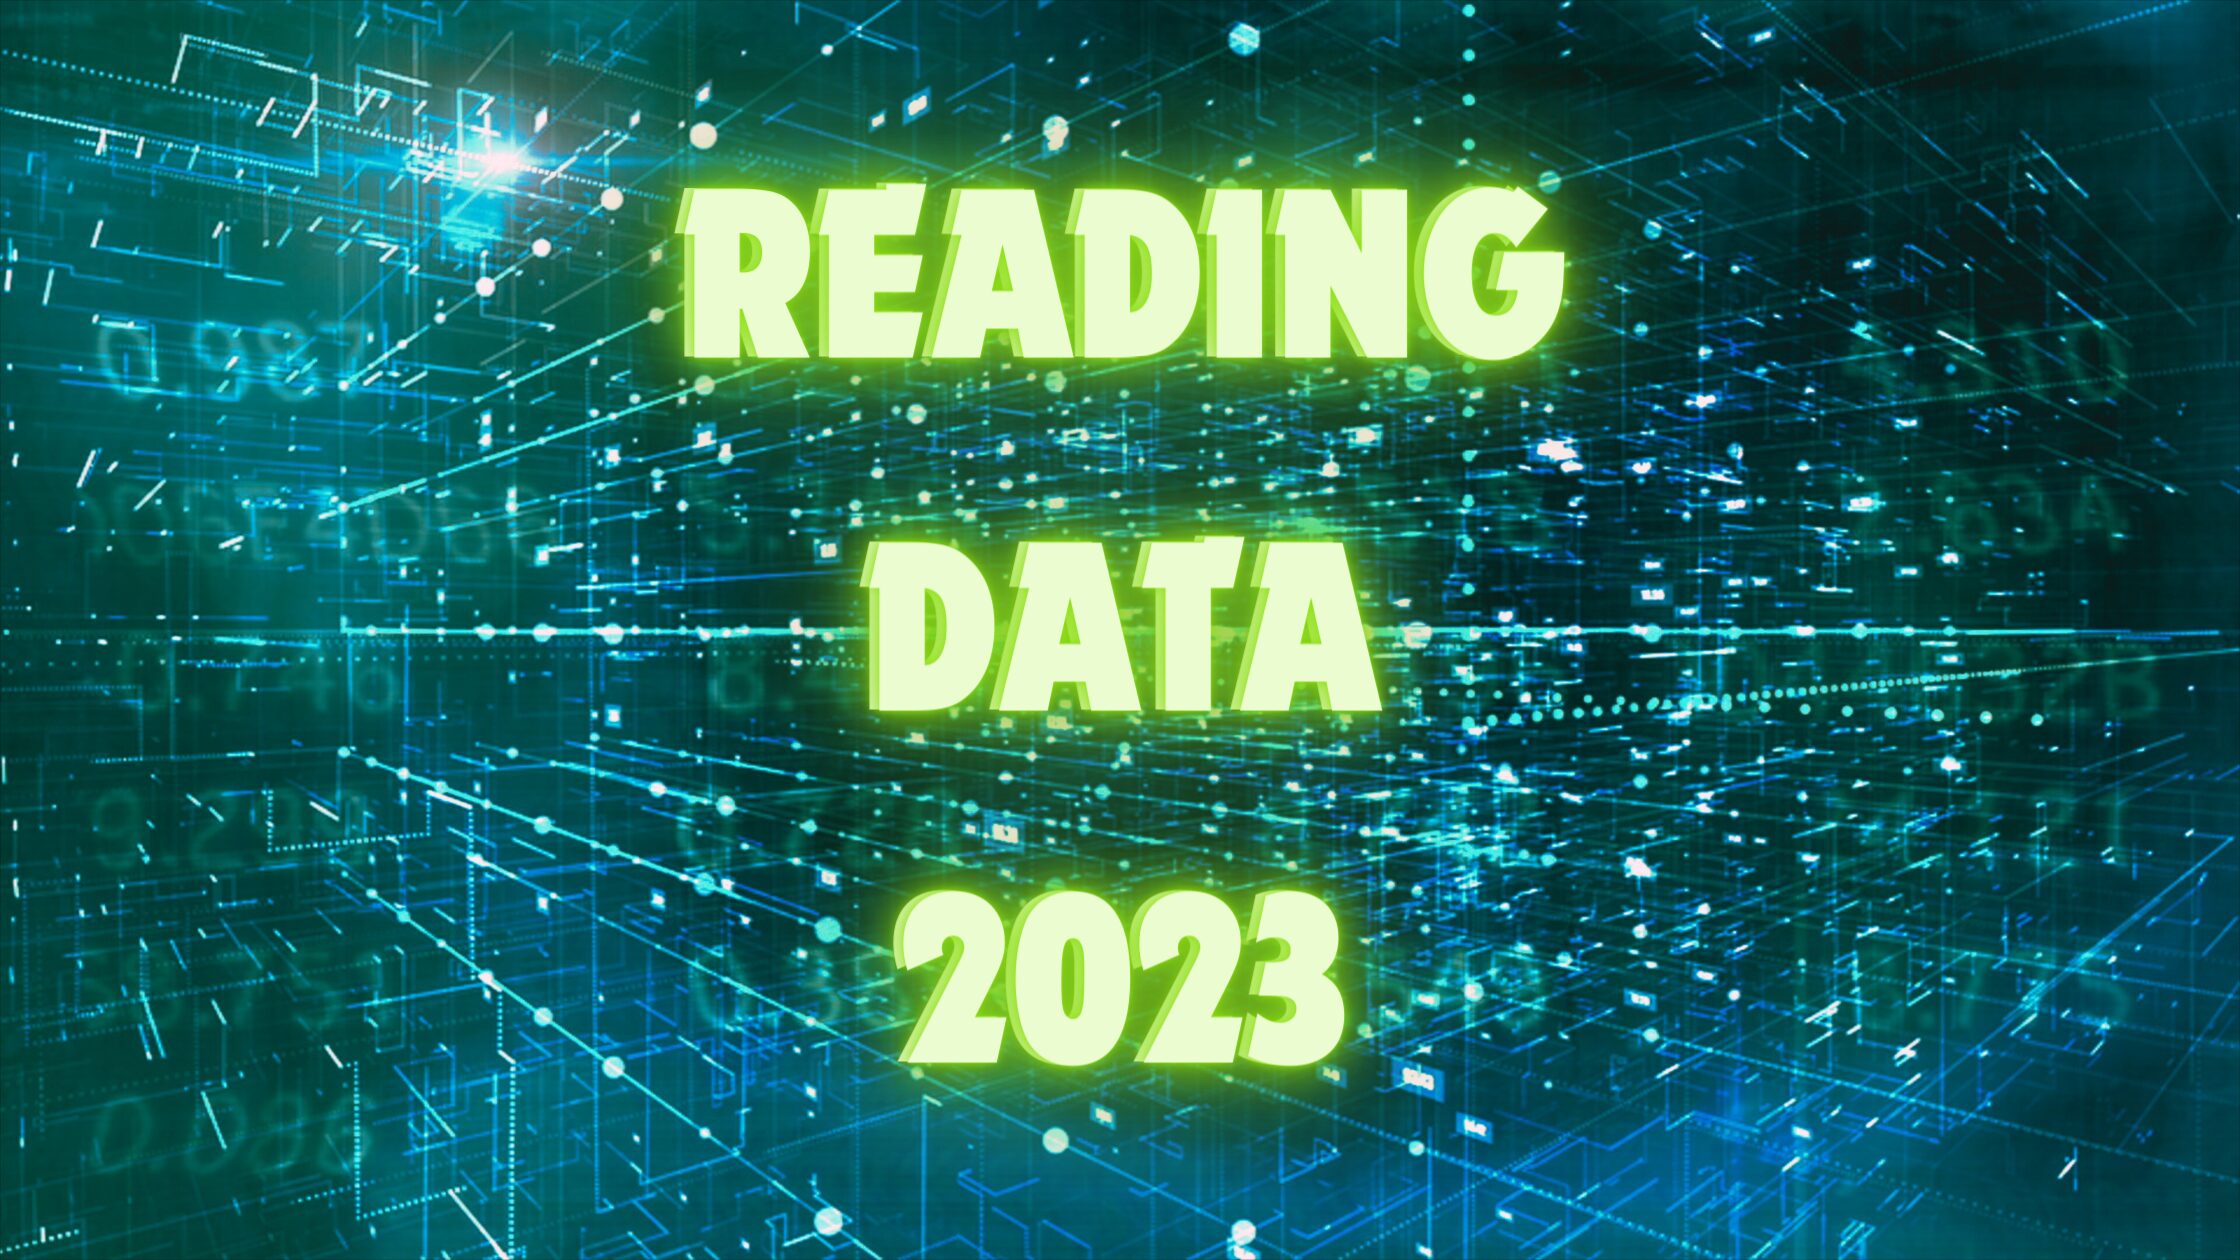 reading data 2023 in the matrix